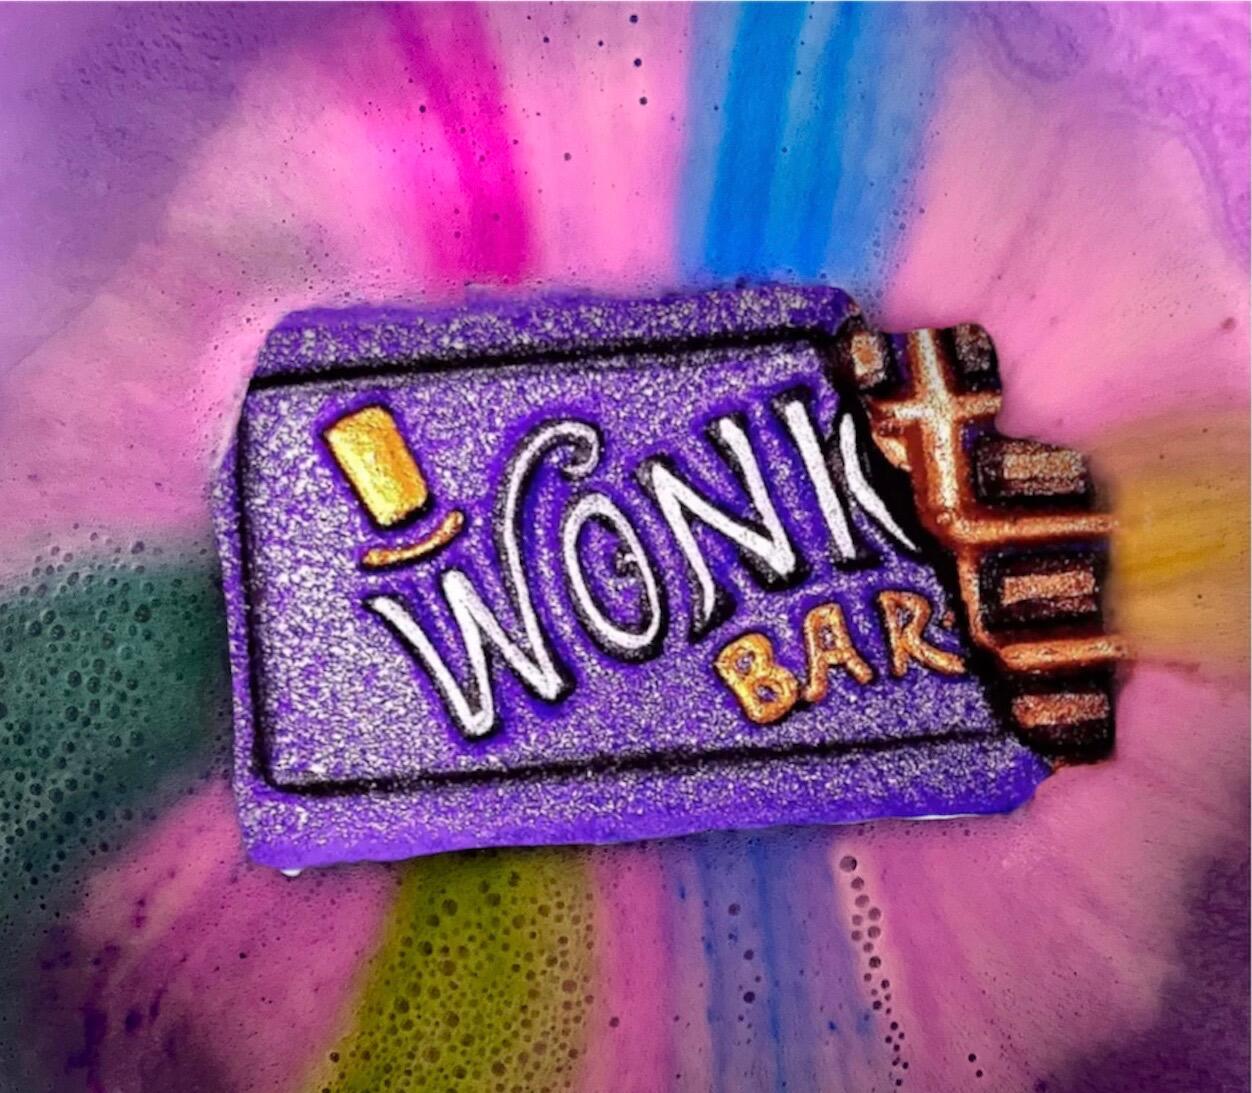 wonka chocolate bar bath bomb